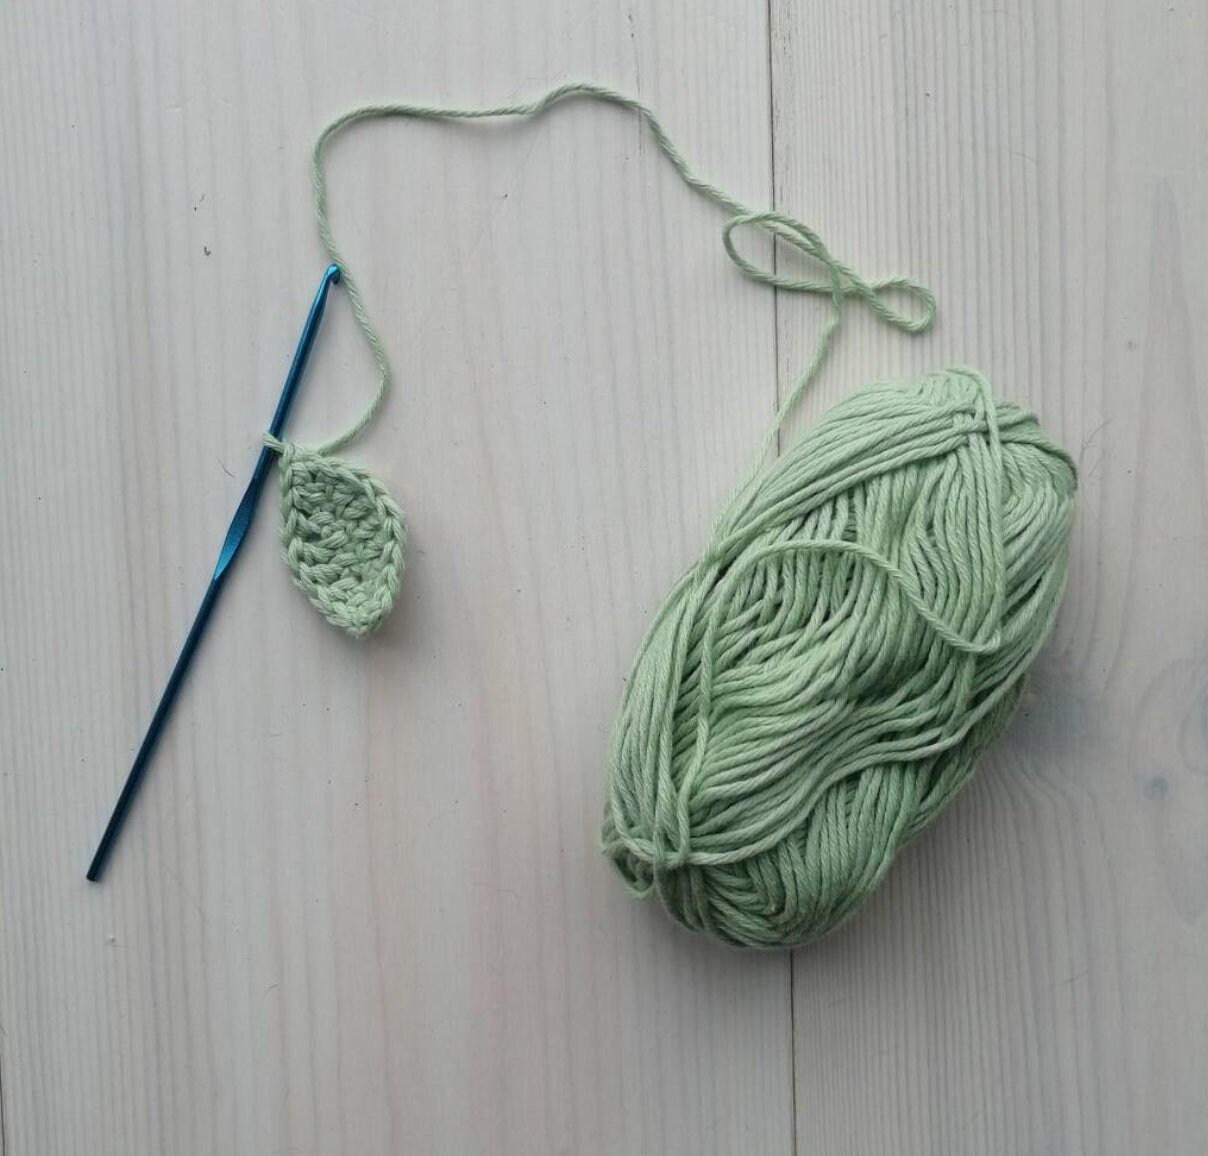 CROCHET KIT, DIY Everlasting Flower Kit, Make Your Own Bouquet,  Intermediate Level Crochet Project, Mother's Day, Valentine's Day 